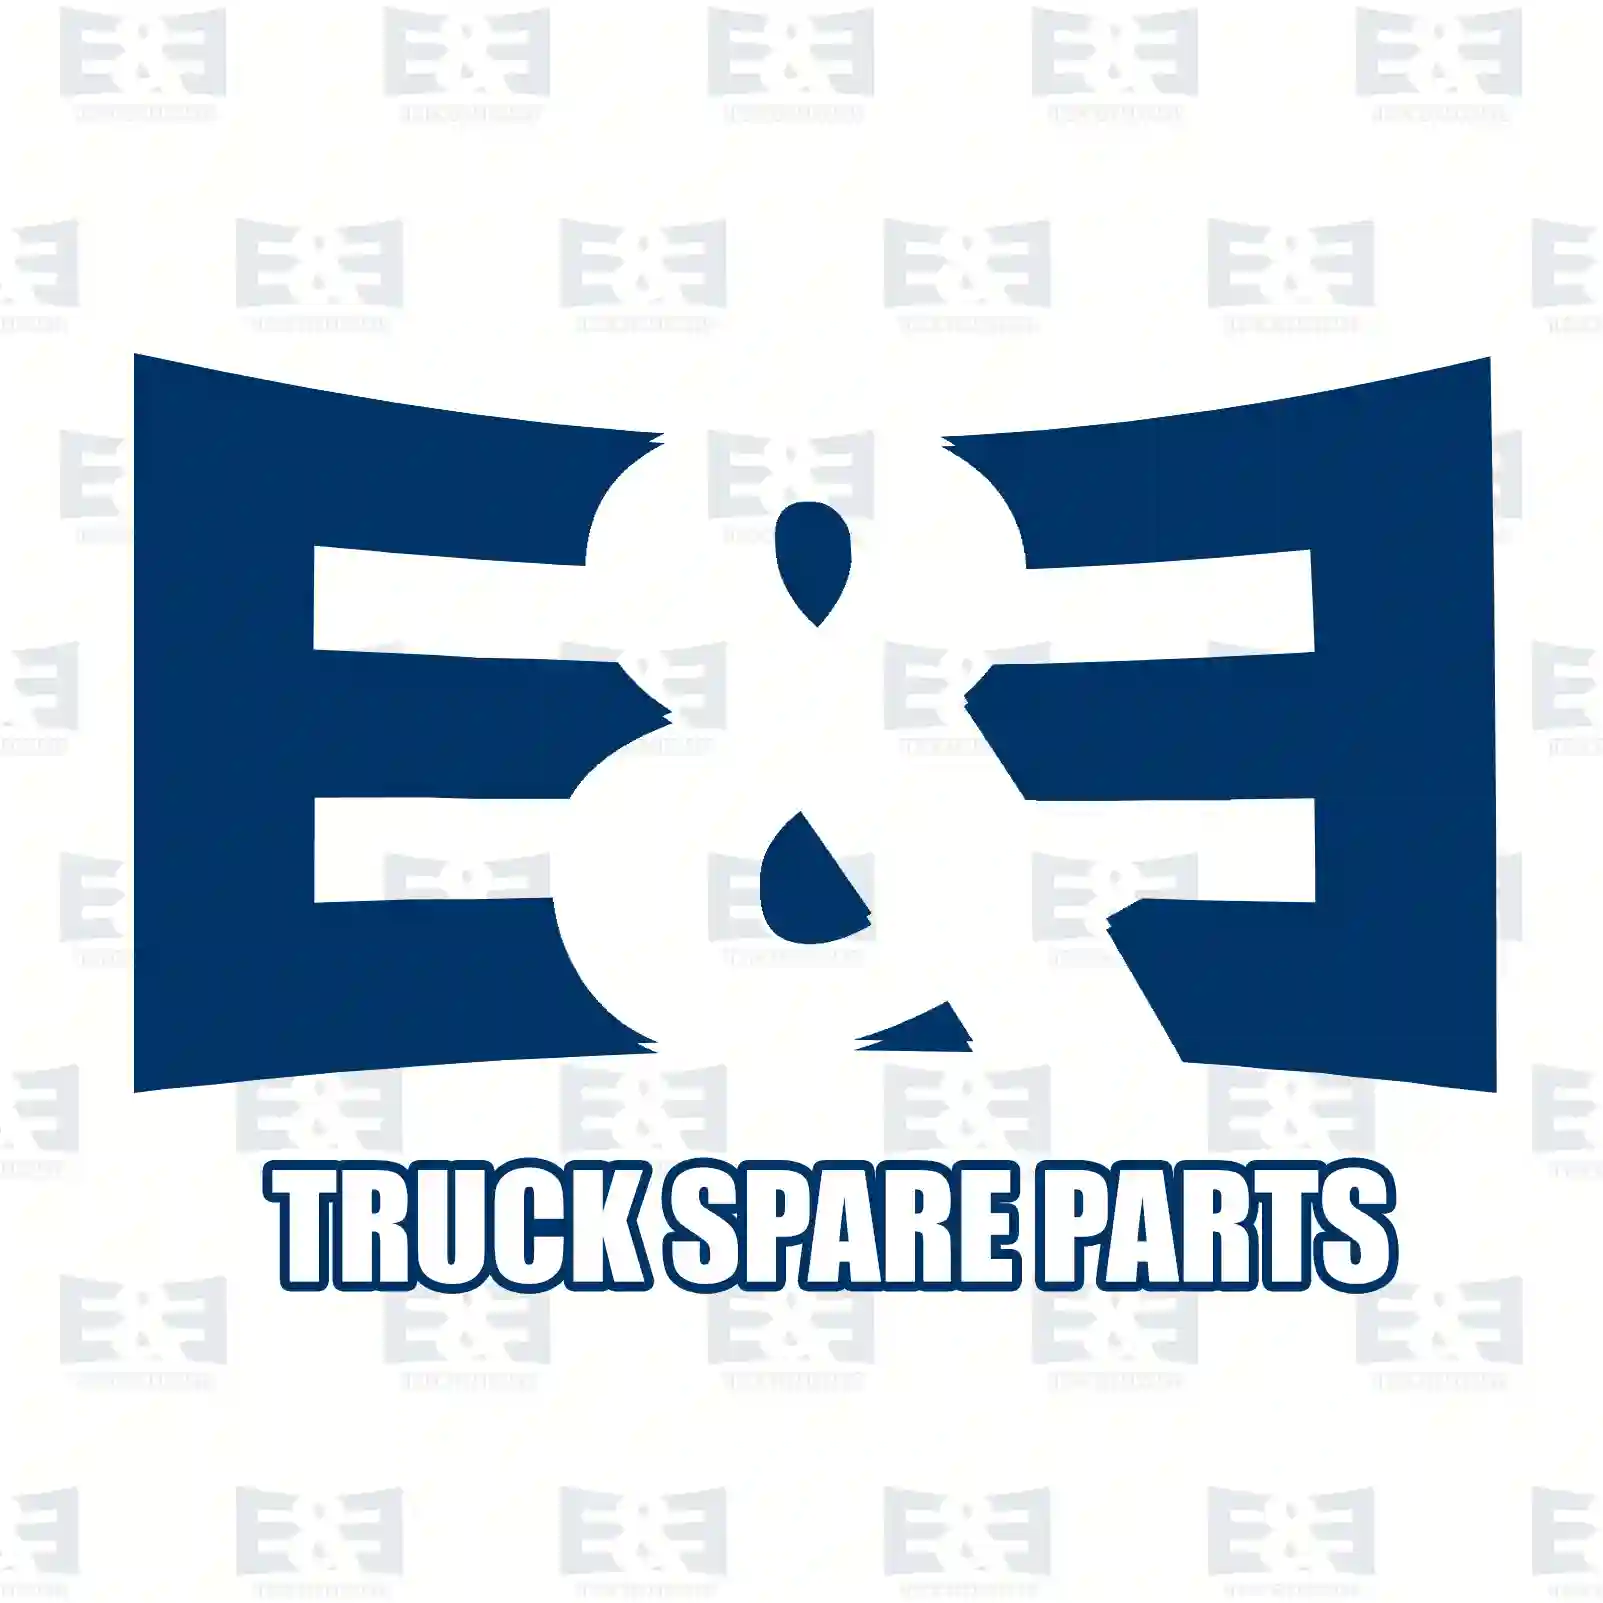 Fuse Fuse, EE No 2E2299561 ,  oem no:6917401, 61136917401, 1245535, 4350804, 24426653, 7420378932, 7703297152, 20378932, N10261501 E&E Truck Spare Parts | Truck Spare Parts, Auotomotive Spare Parts